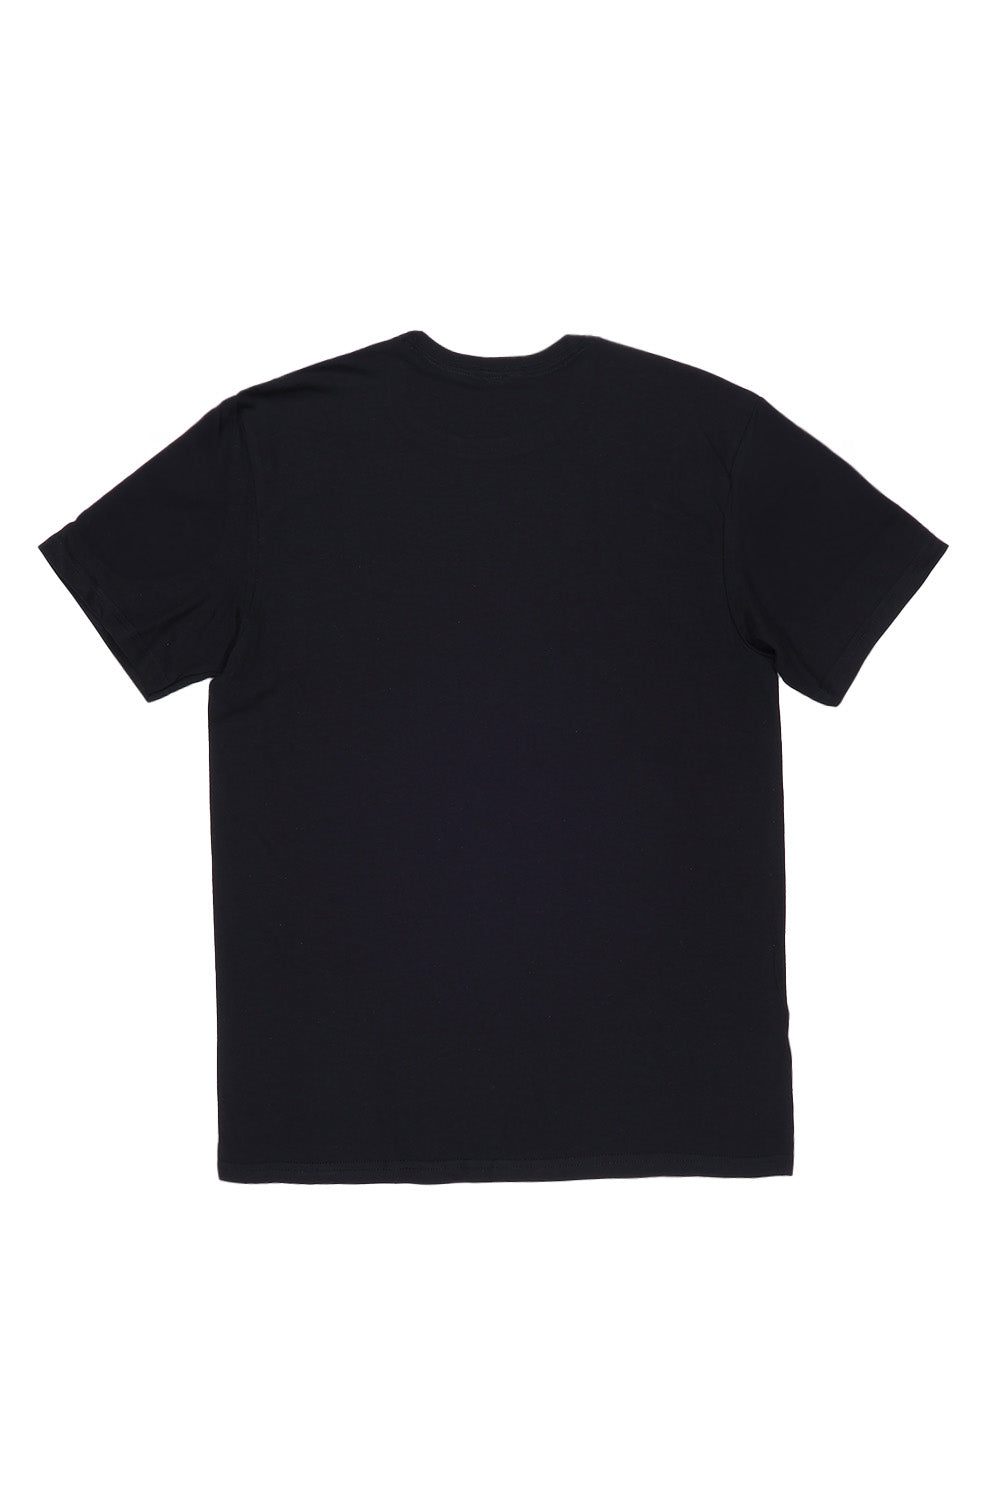 Twin Cherries T-Shirt in Black (Custom Packs)